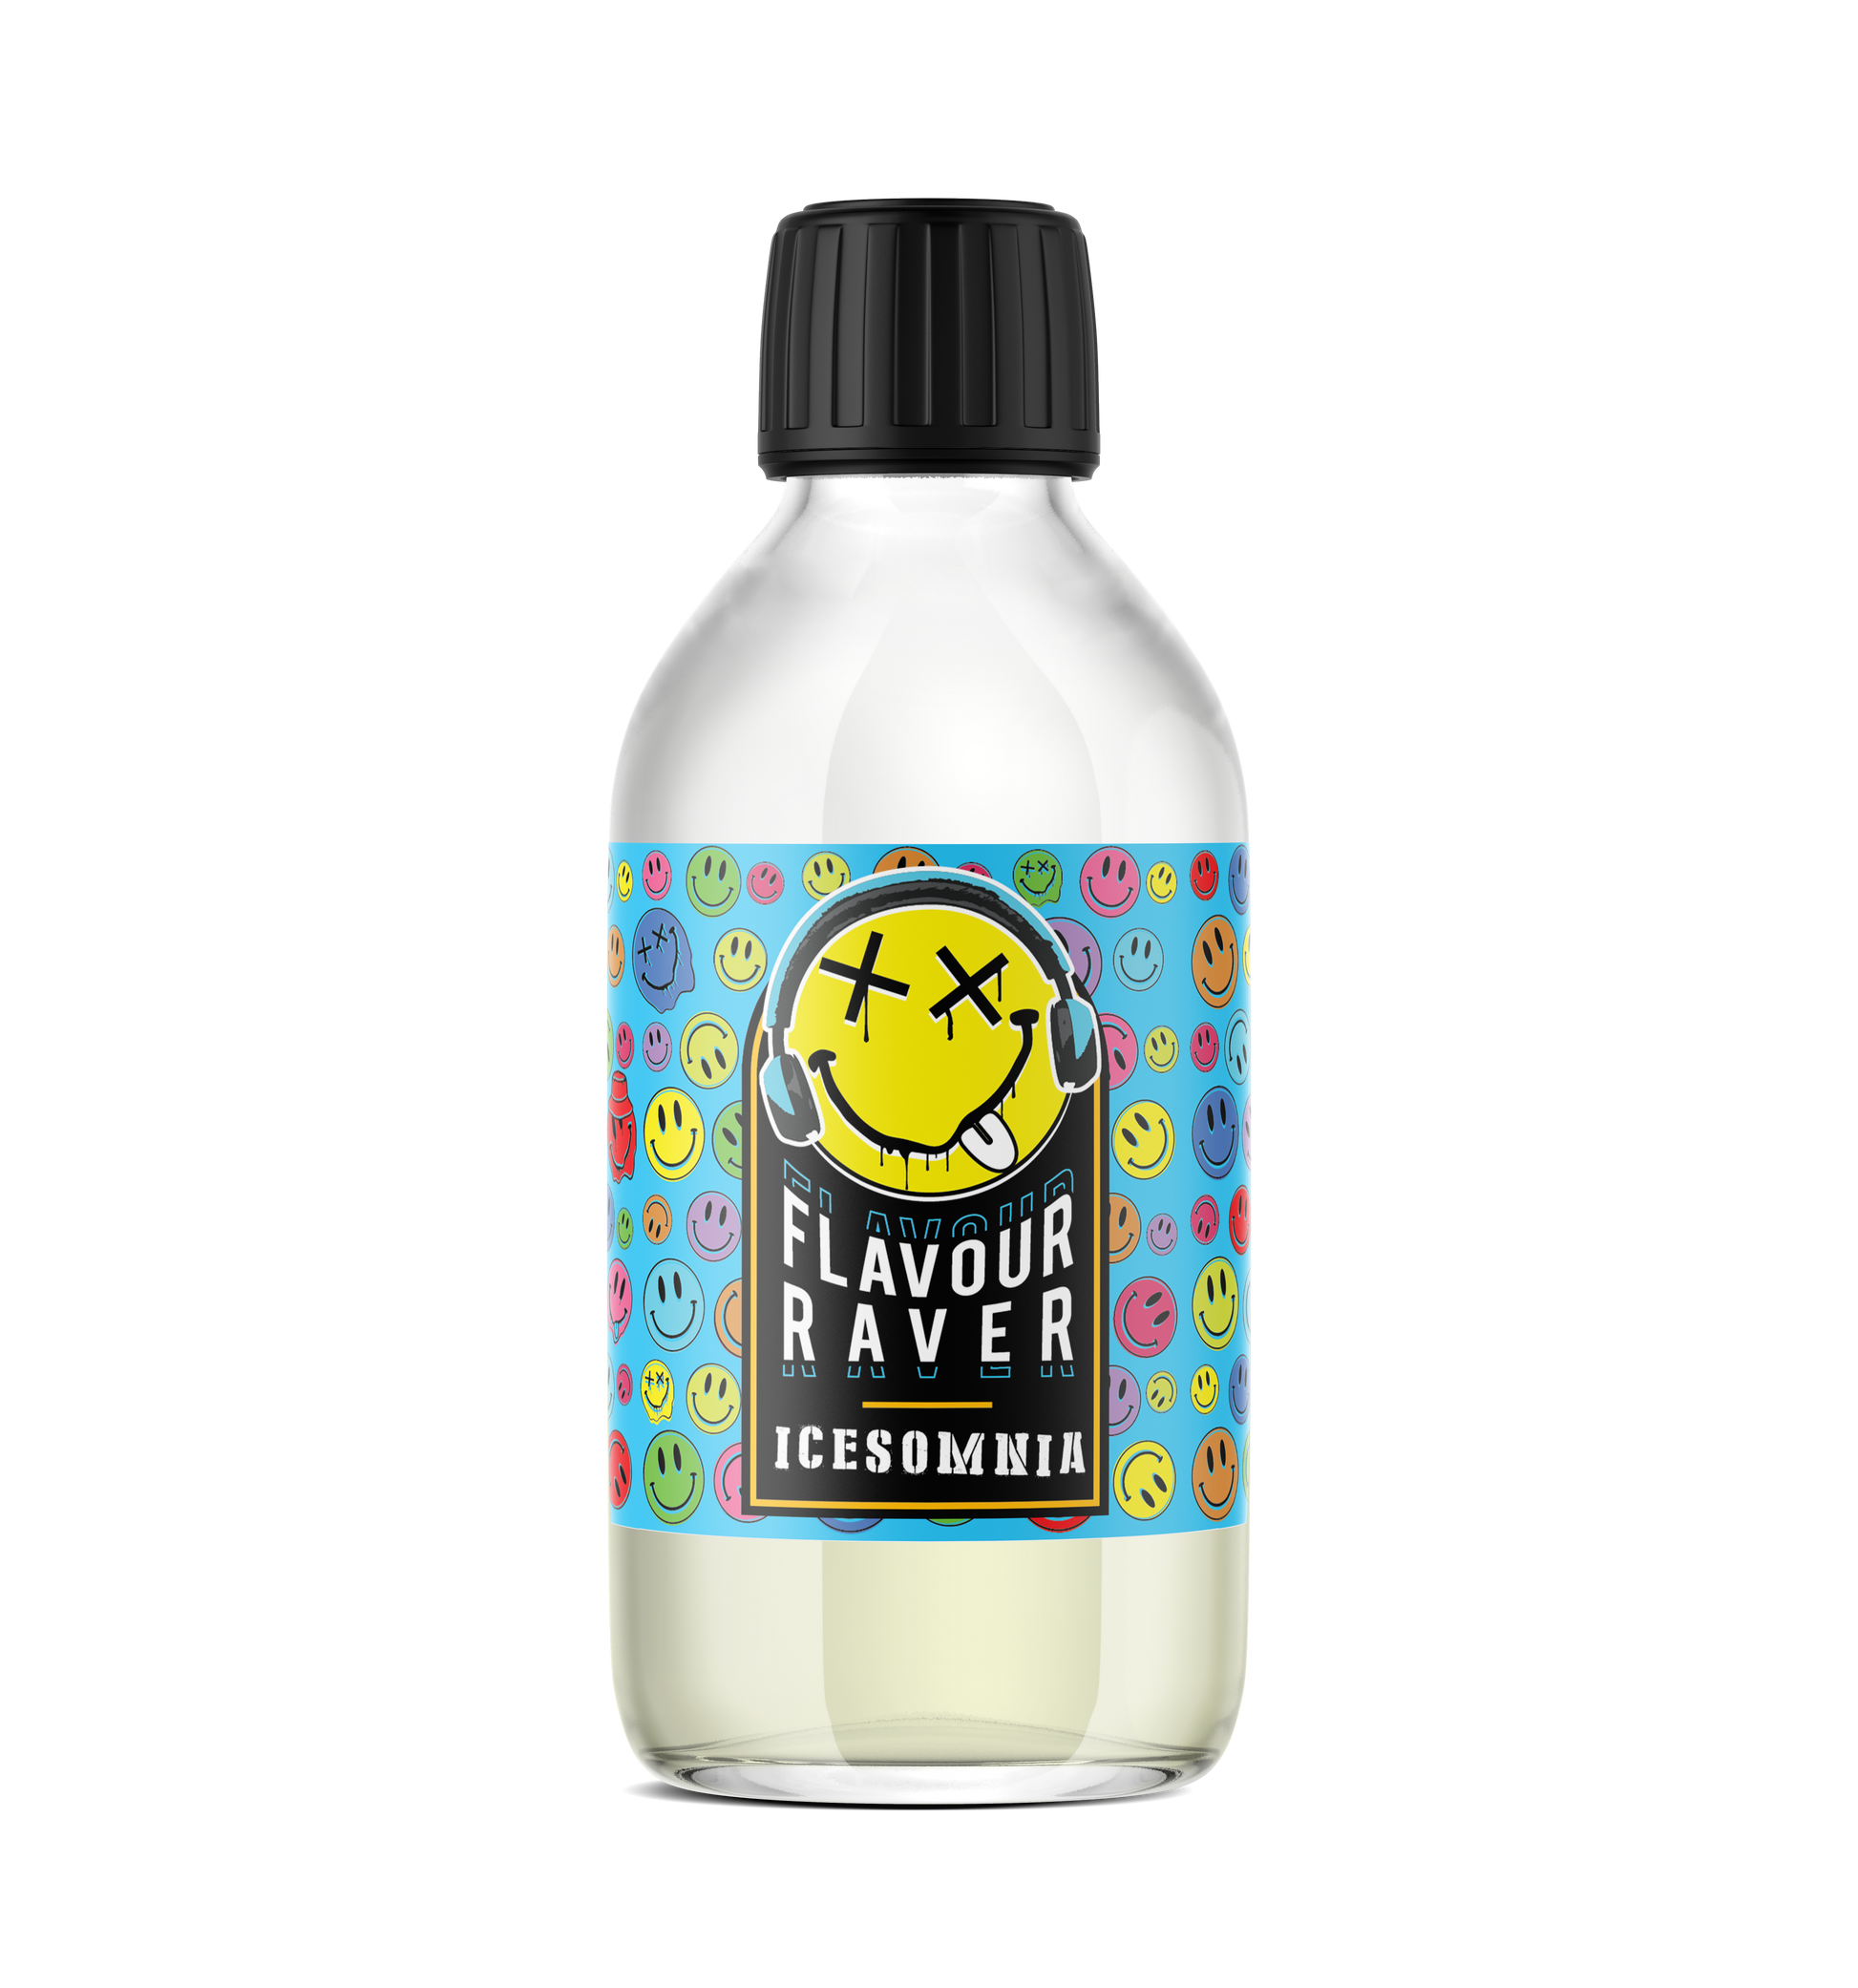 Flavour Raver Icesomnia 200ML Shortfill - The Ace Of Vapez